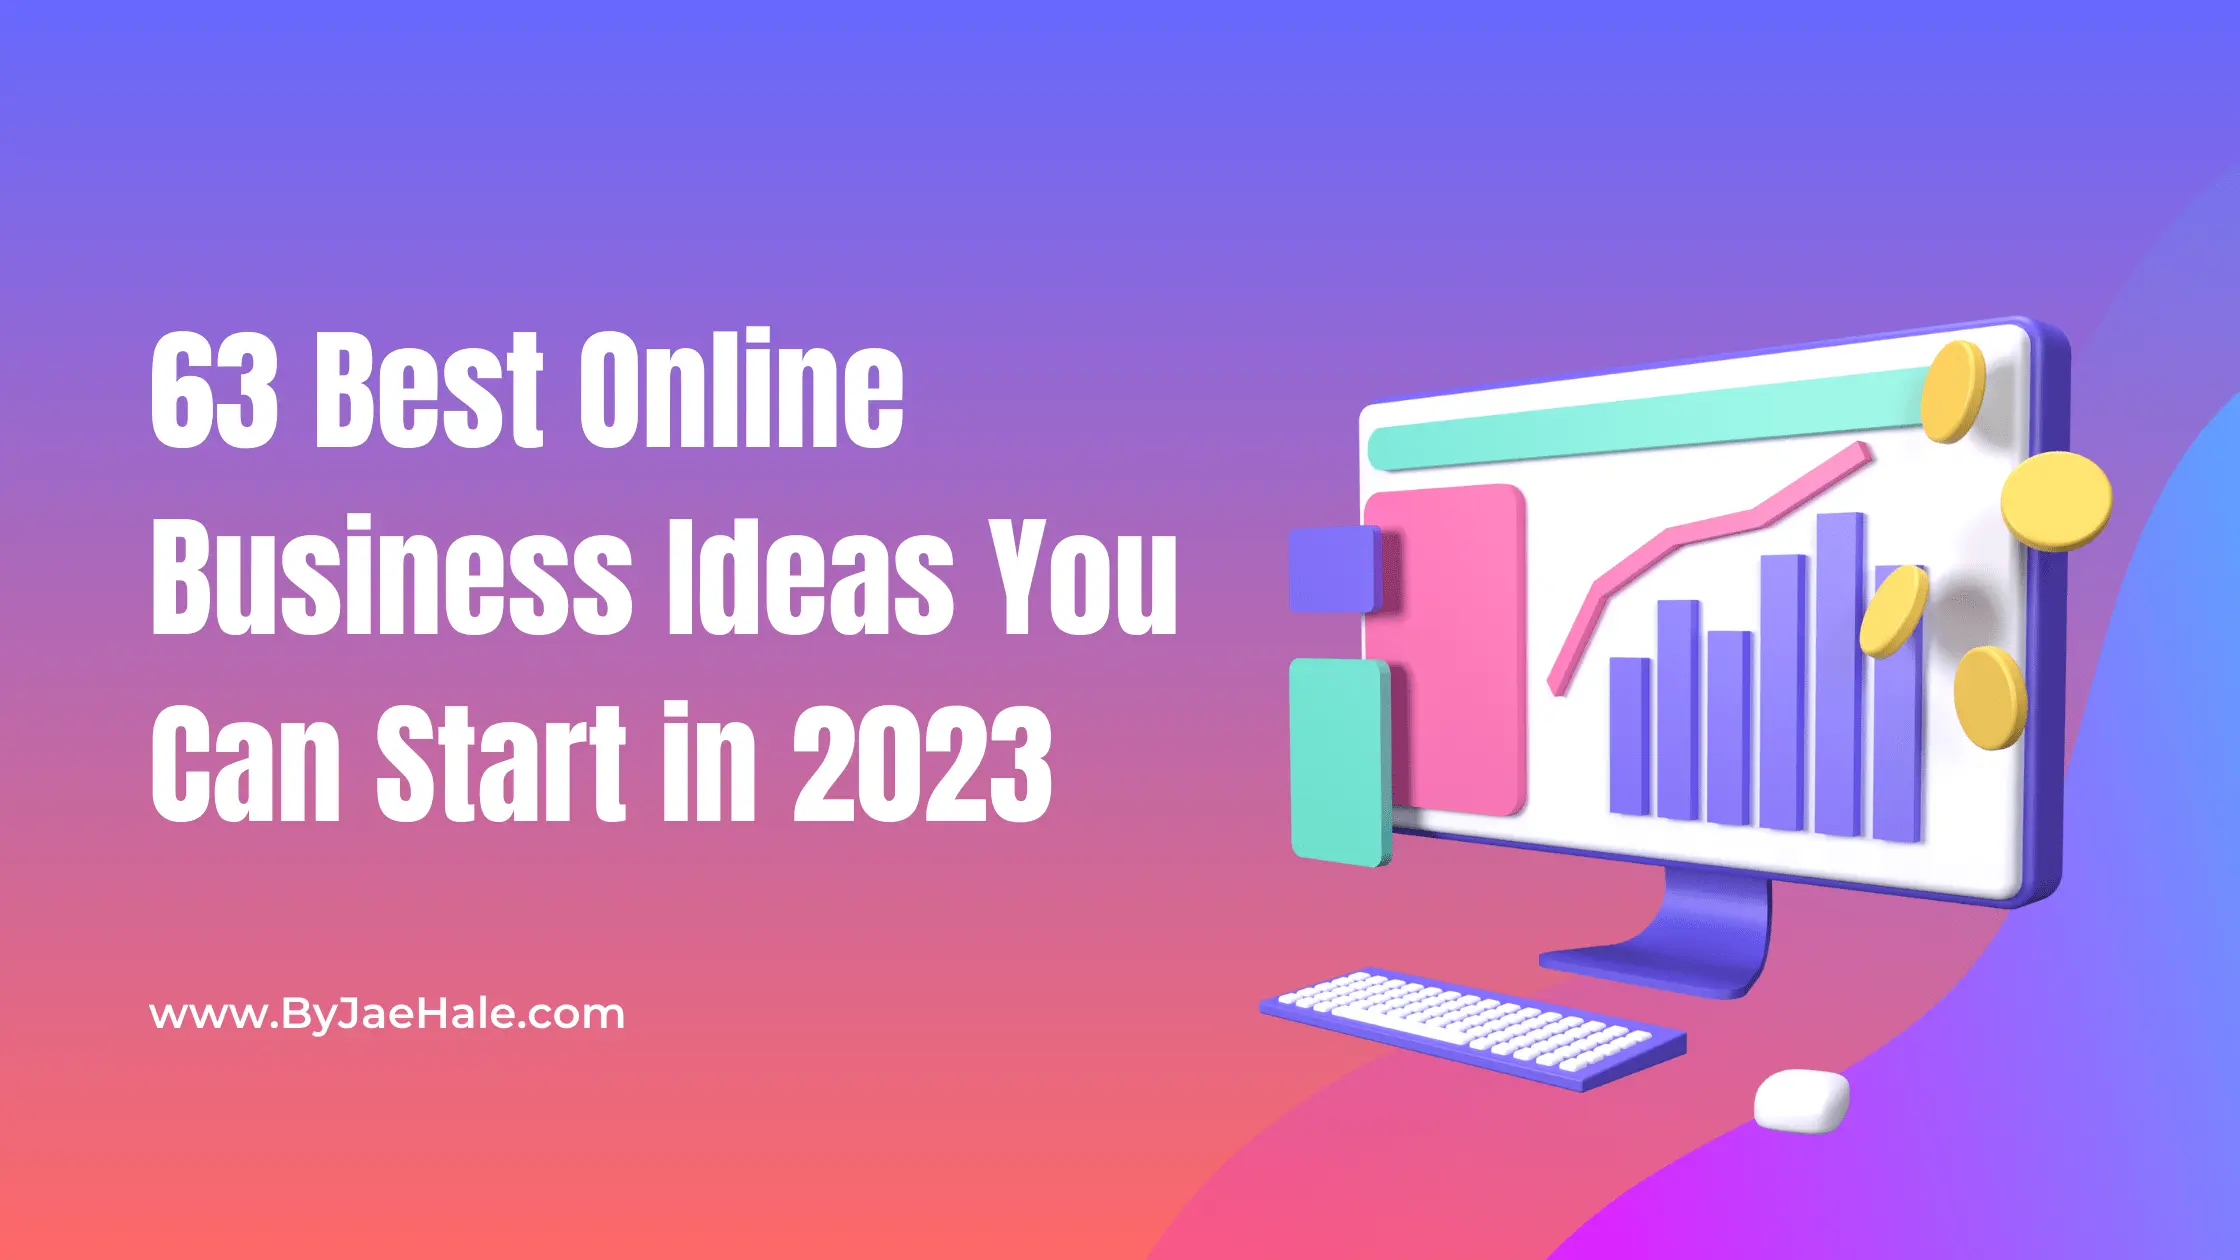 The best online business ideas